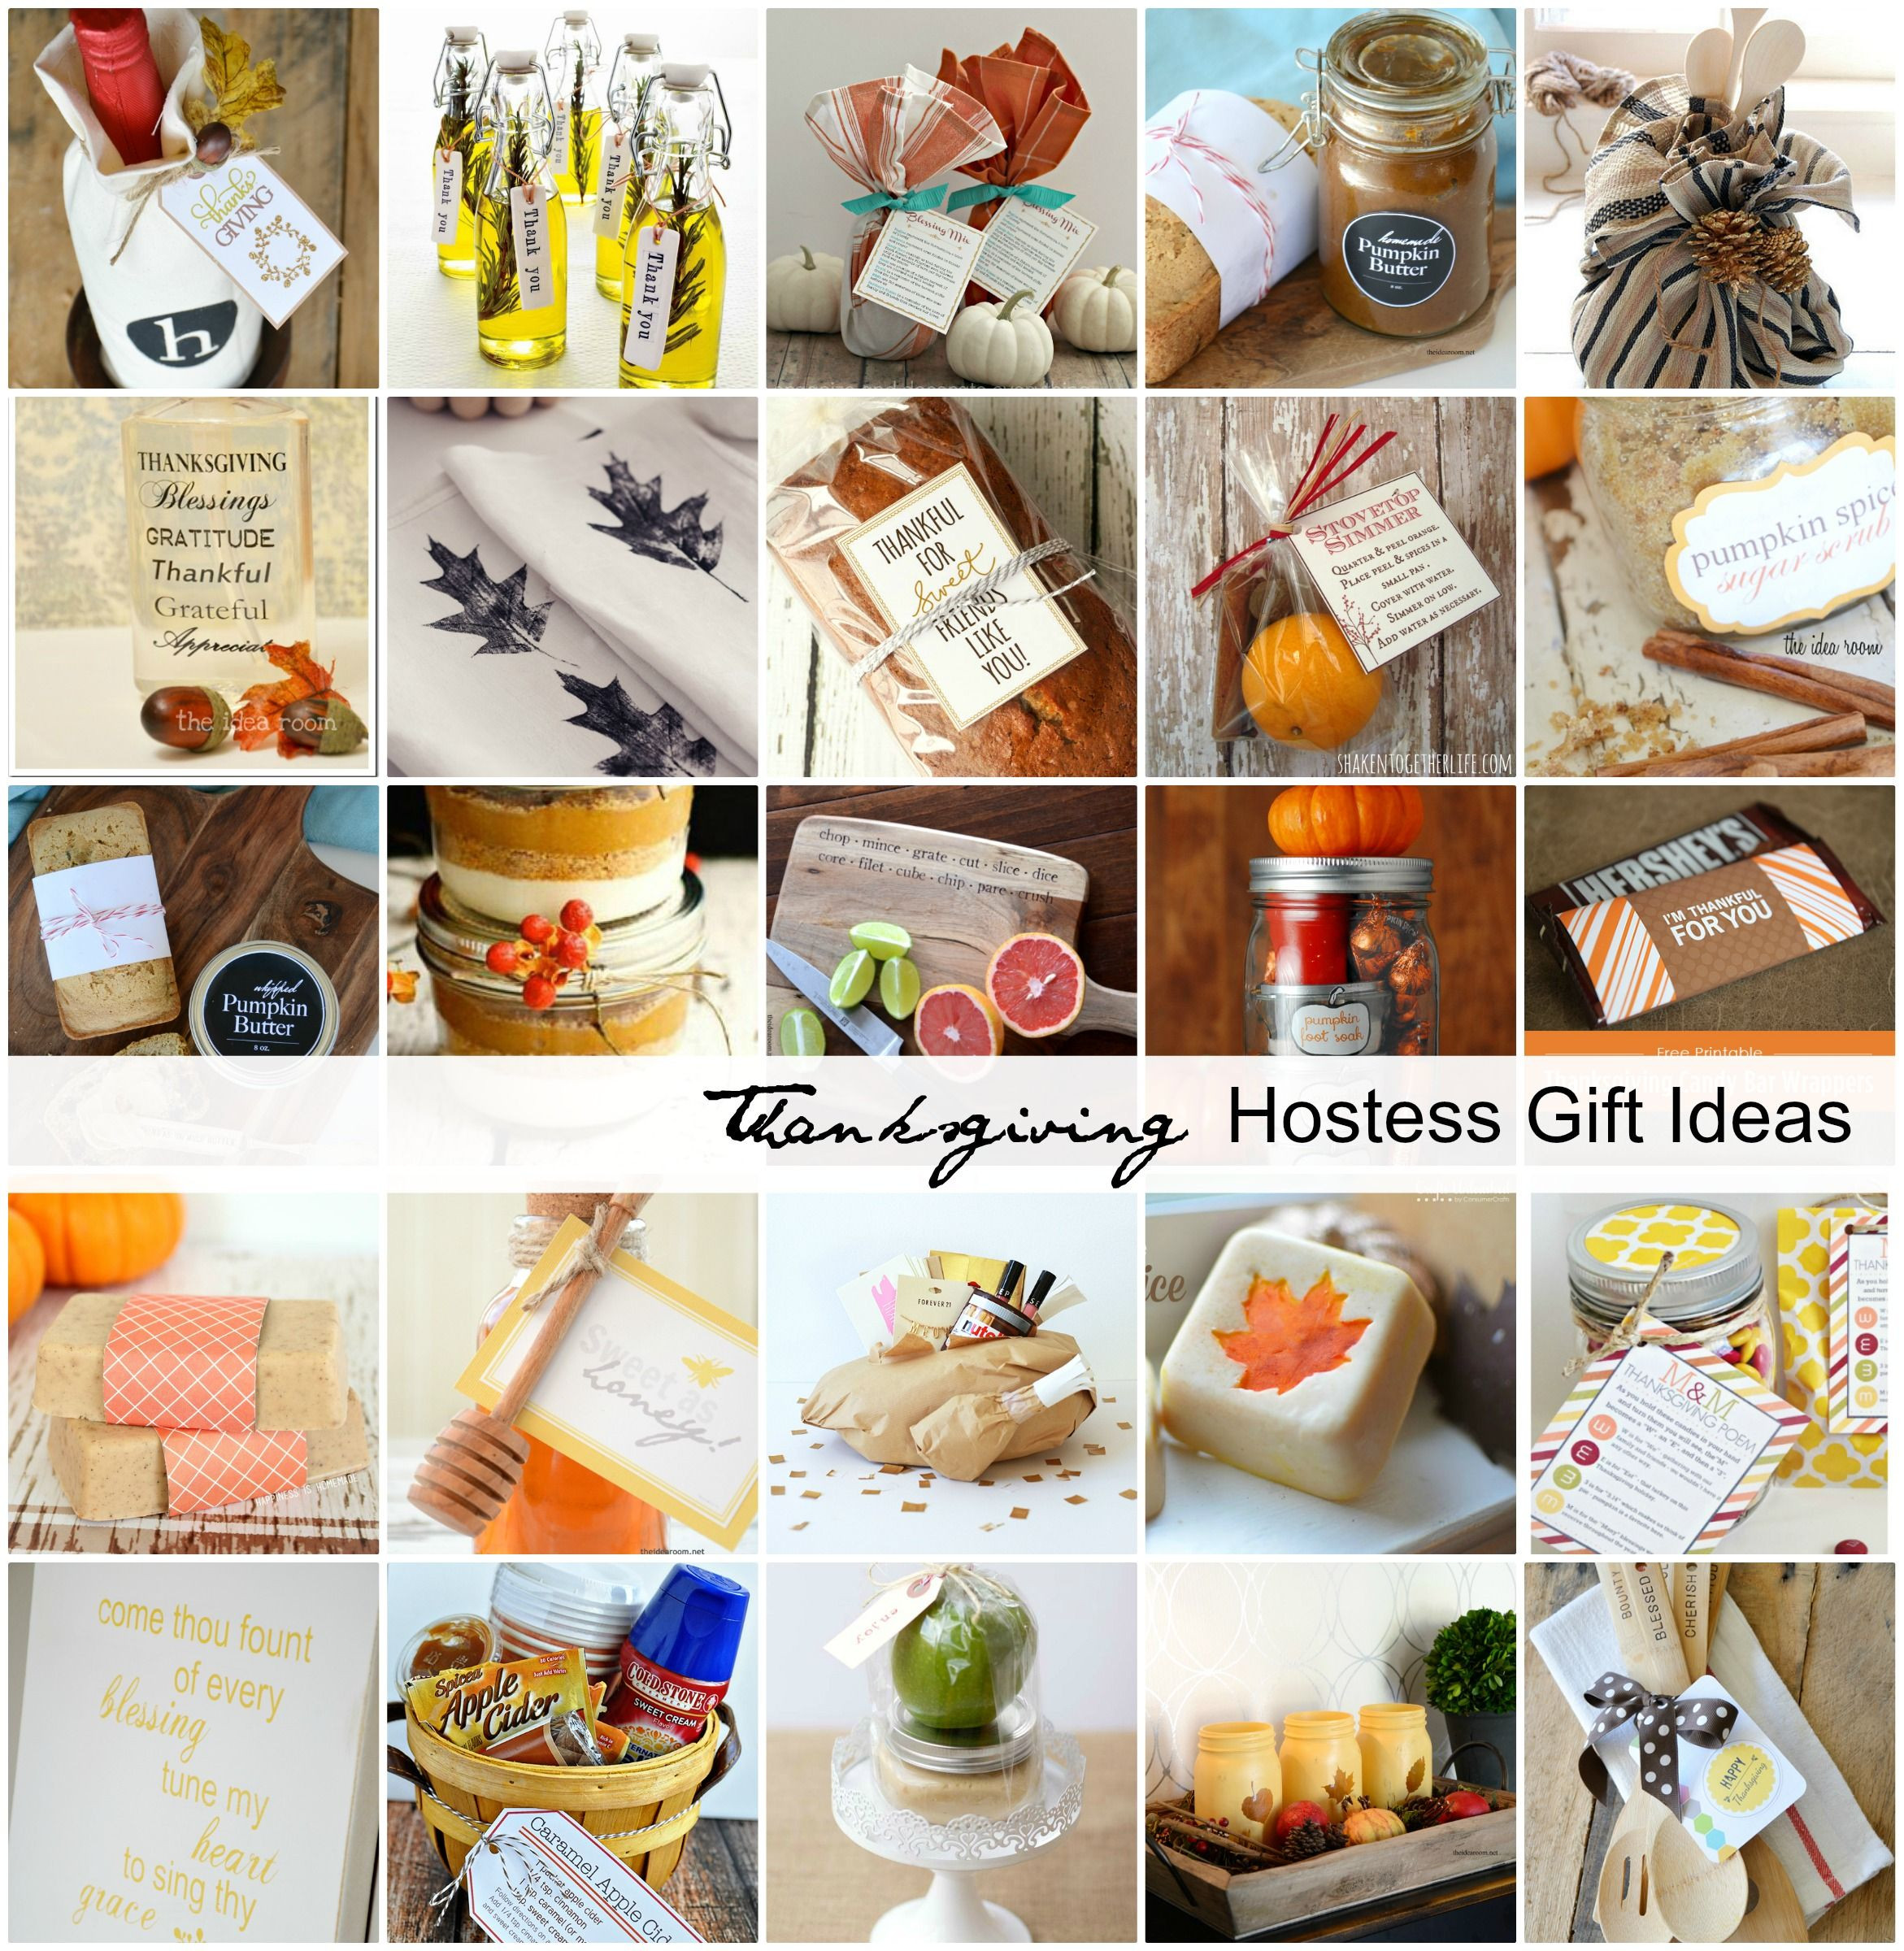 Thanksgiving Hostess Gift Ideas Homemade
 Thanksgiving Hostess Gift Ideas